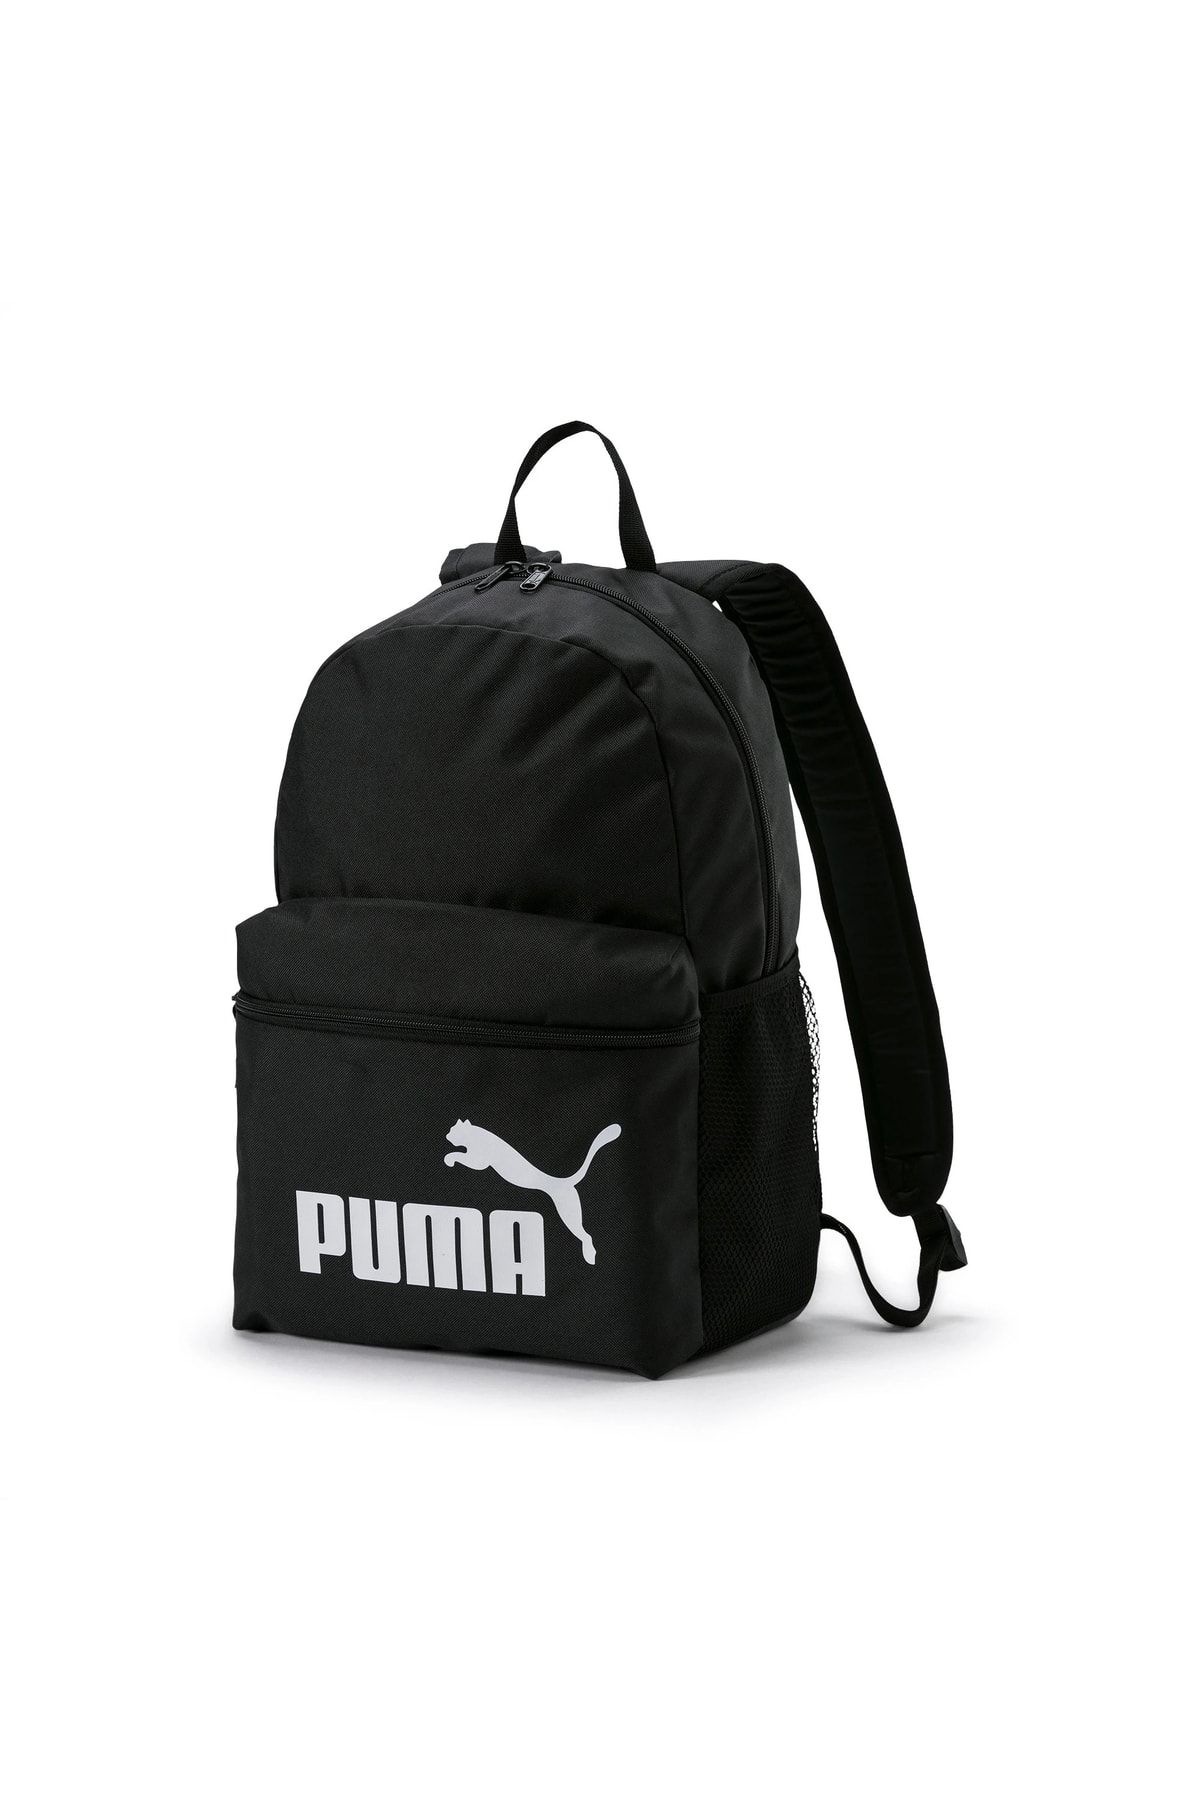 Puma Phase Sırt Çantası 075487 01